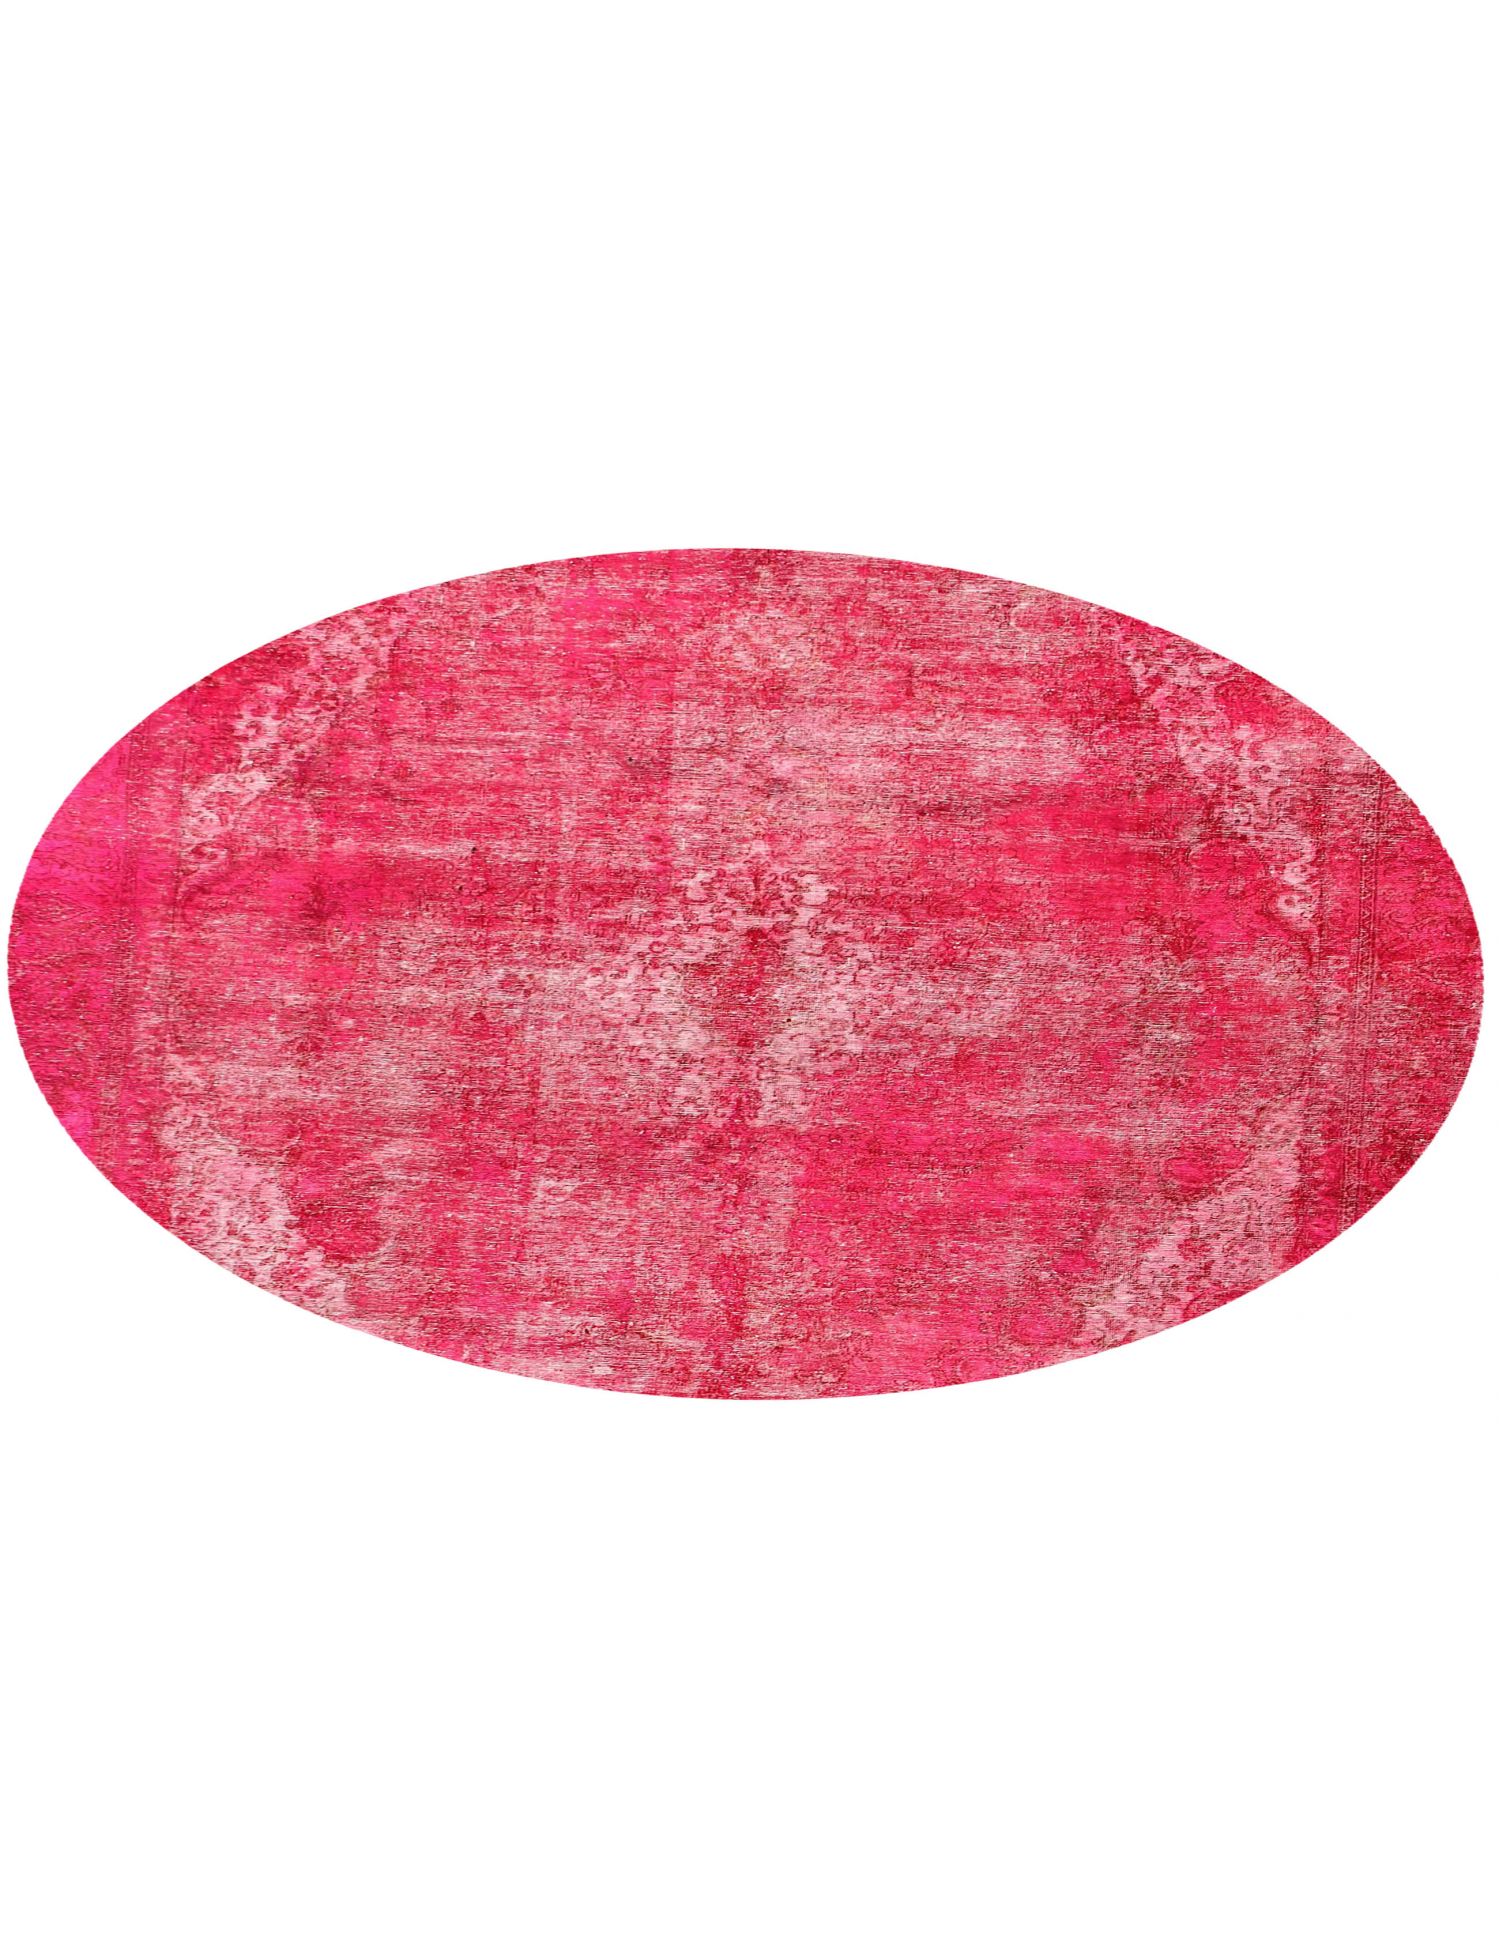 Perzisch Vintage Tapijt  roze <br/>270 x 270 cm